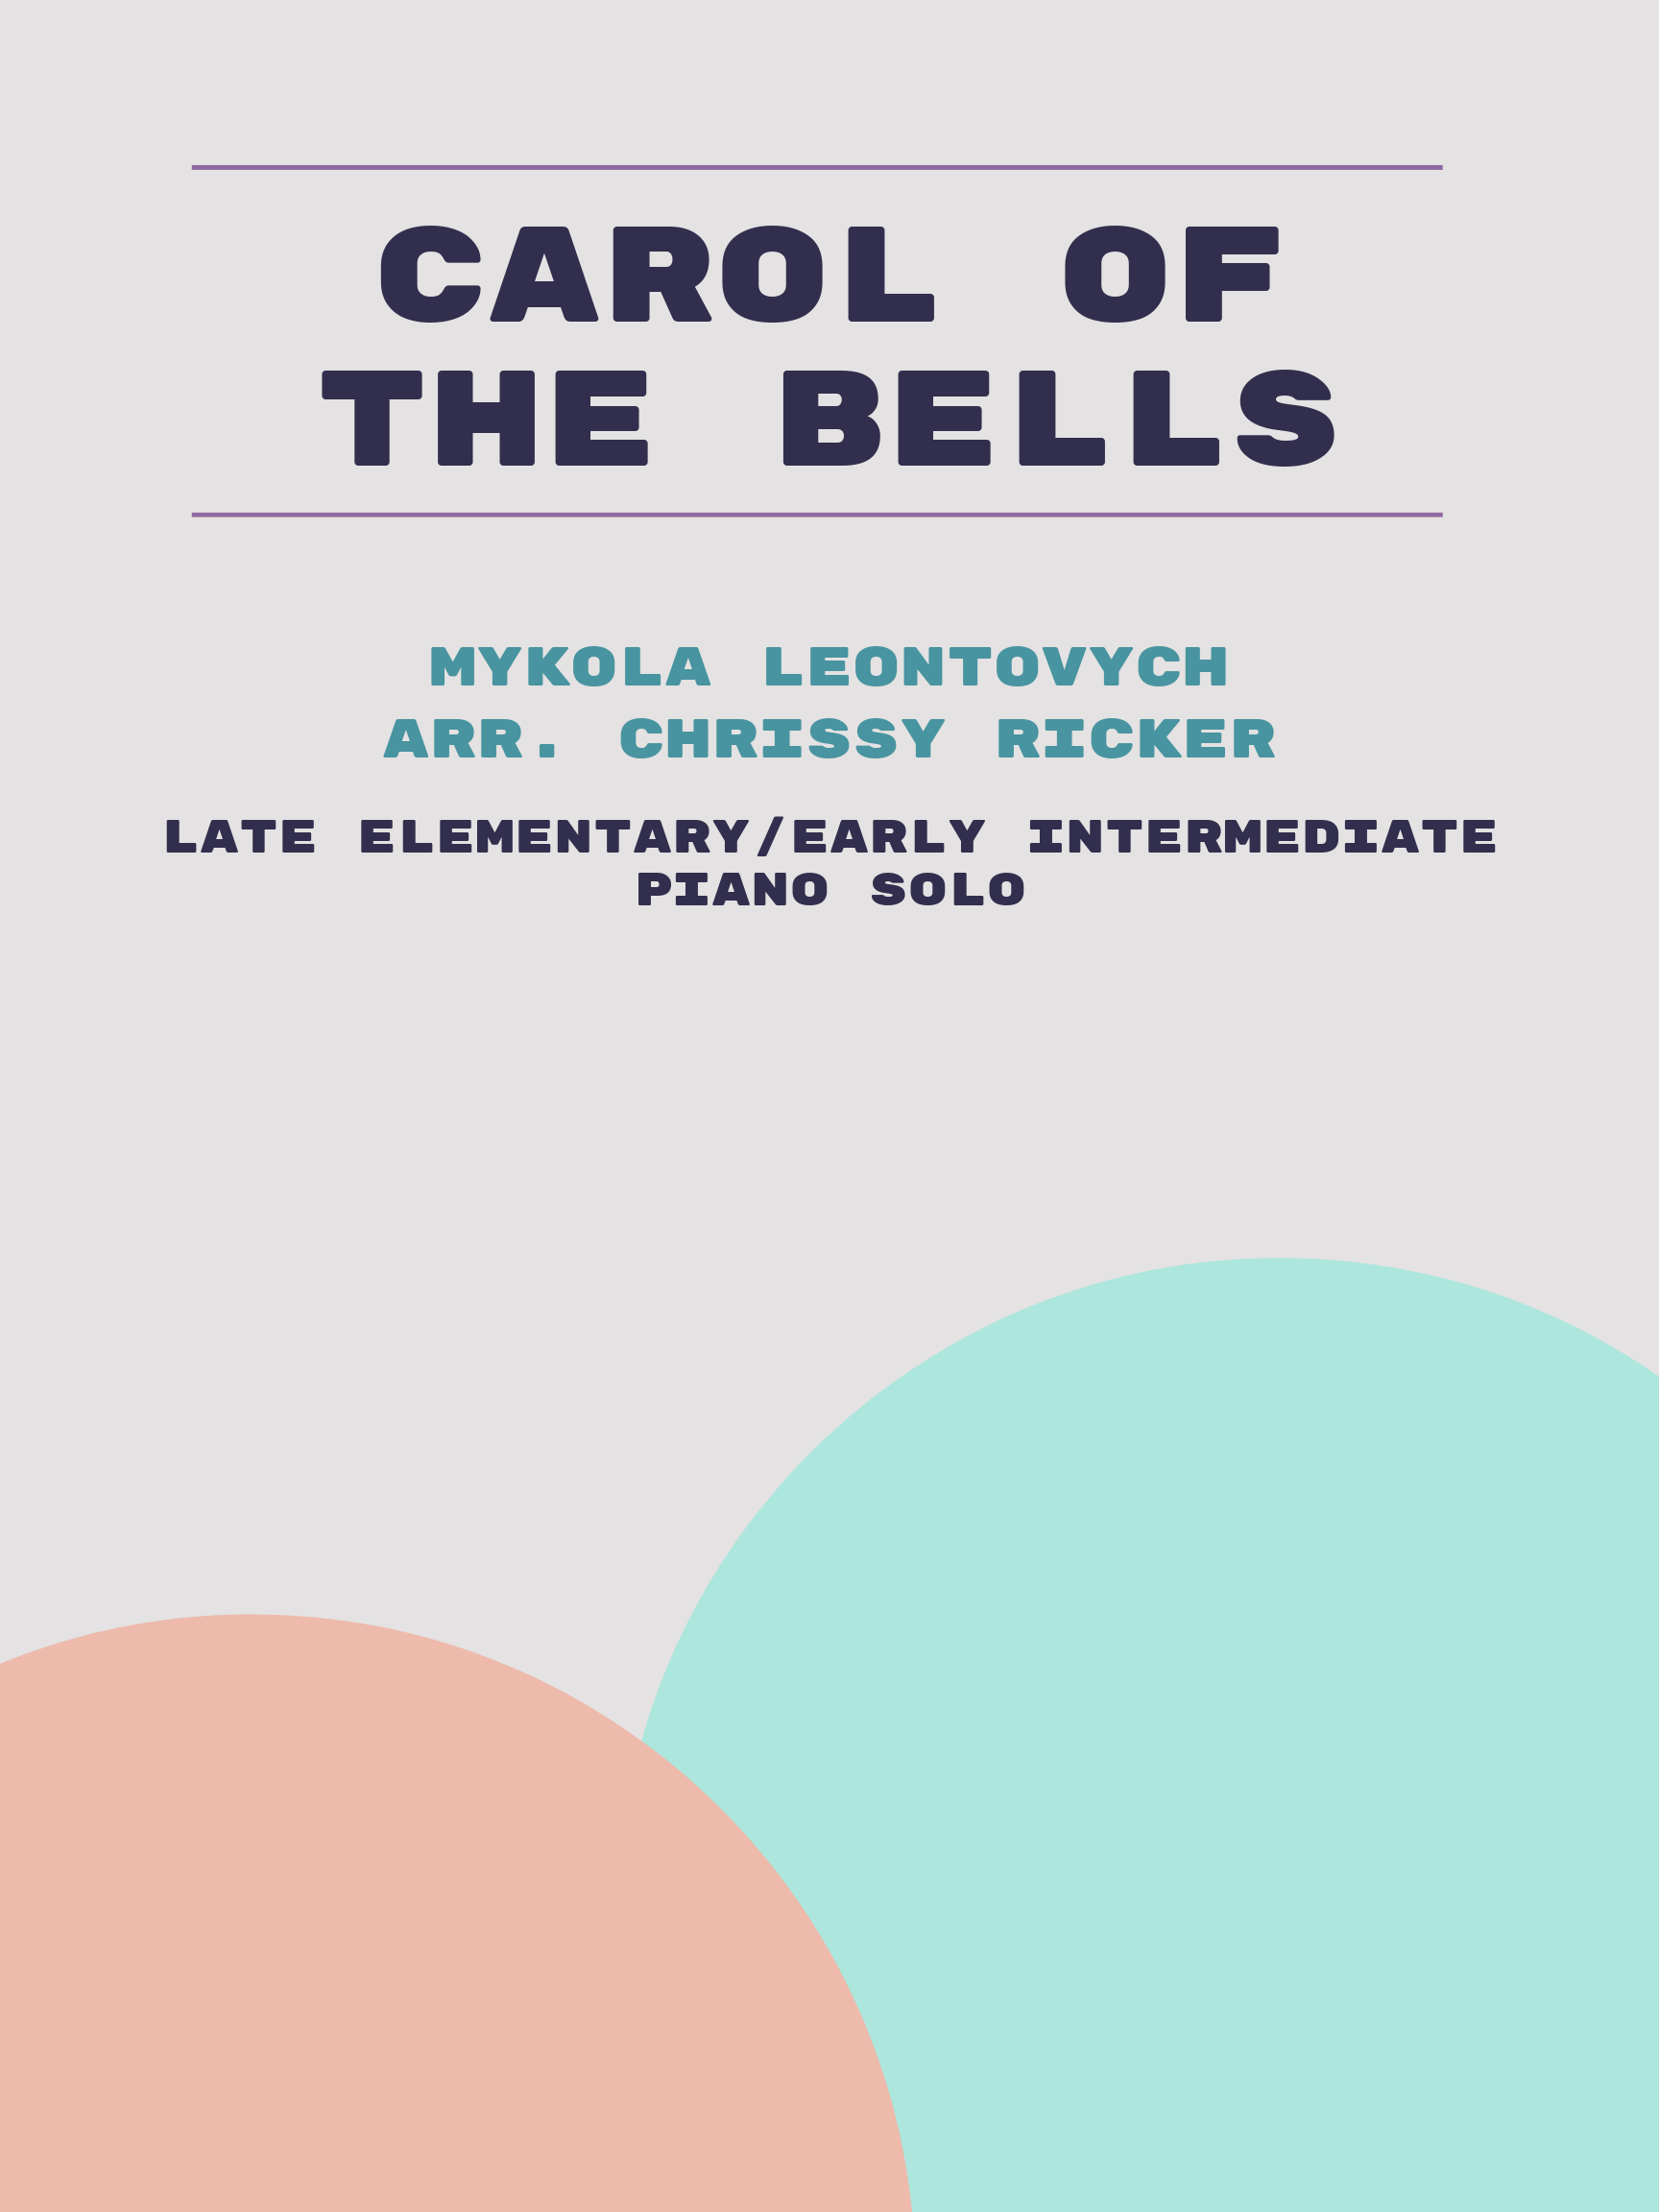 Carol of the Bells by Mykola Leontovych